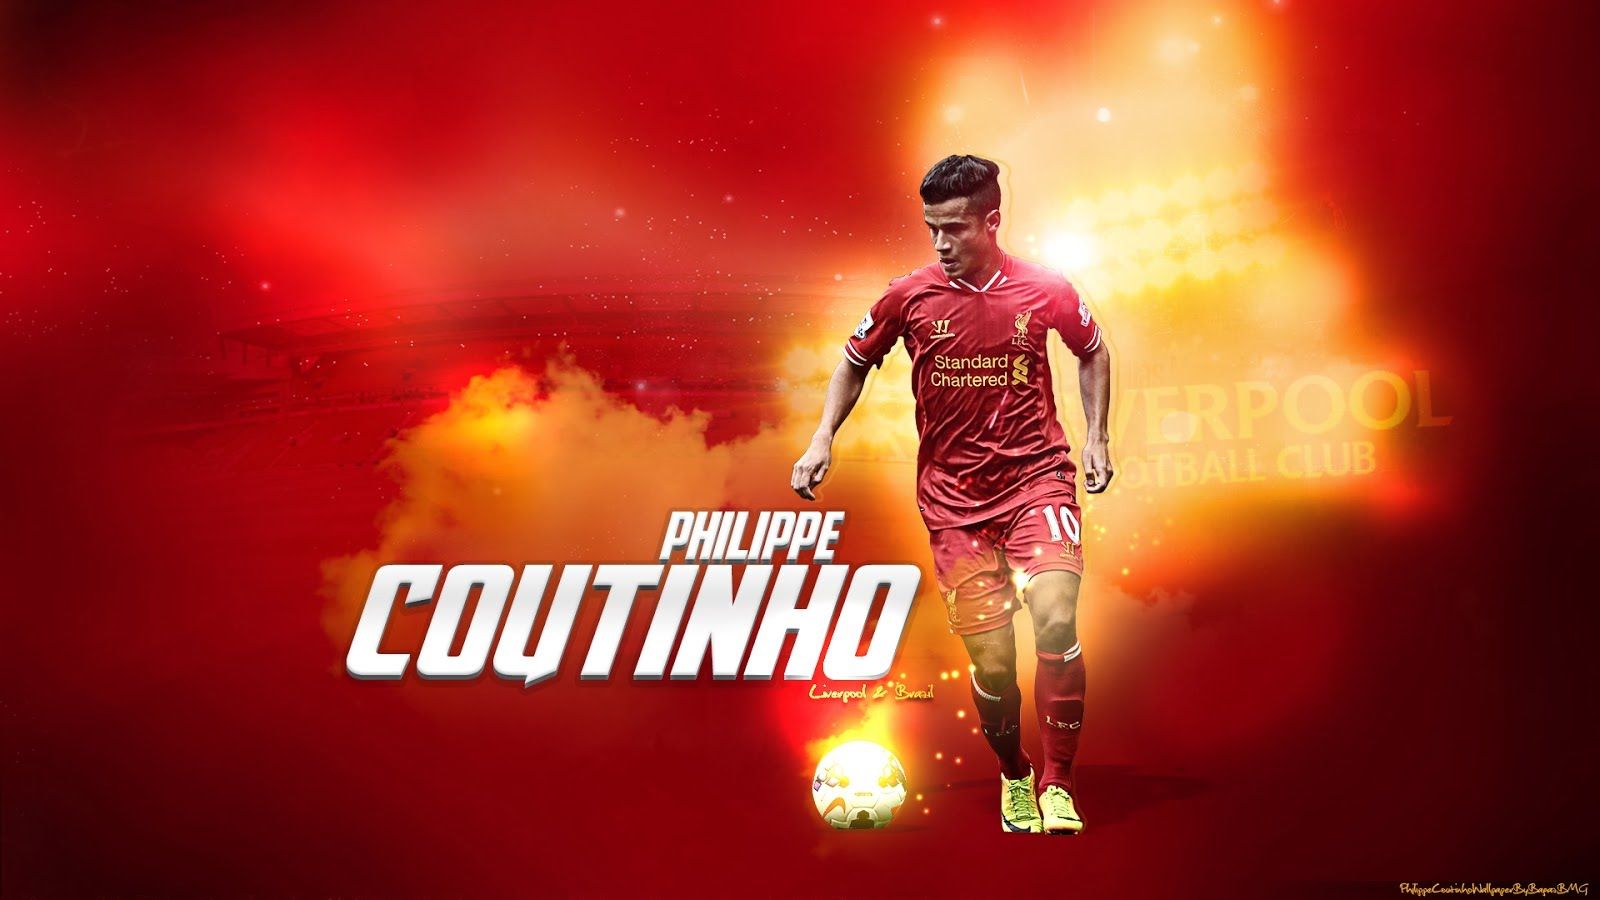 Liverpool Wallpaper 2016 Coutinho - HD Wallpaper 